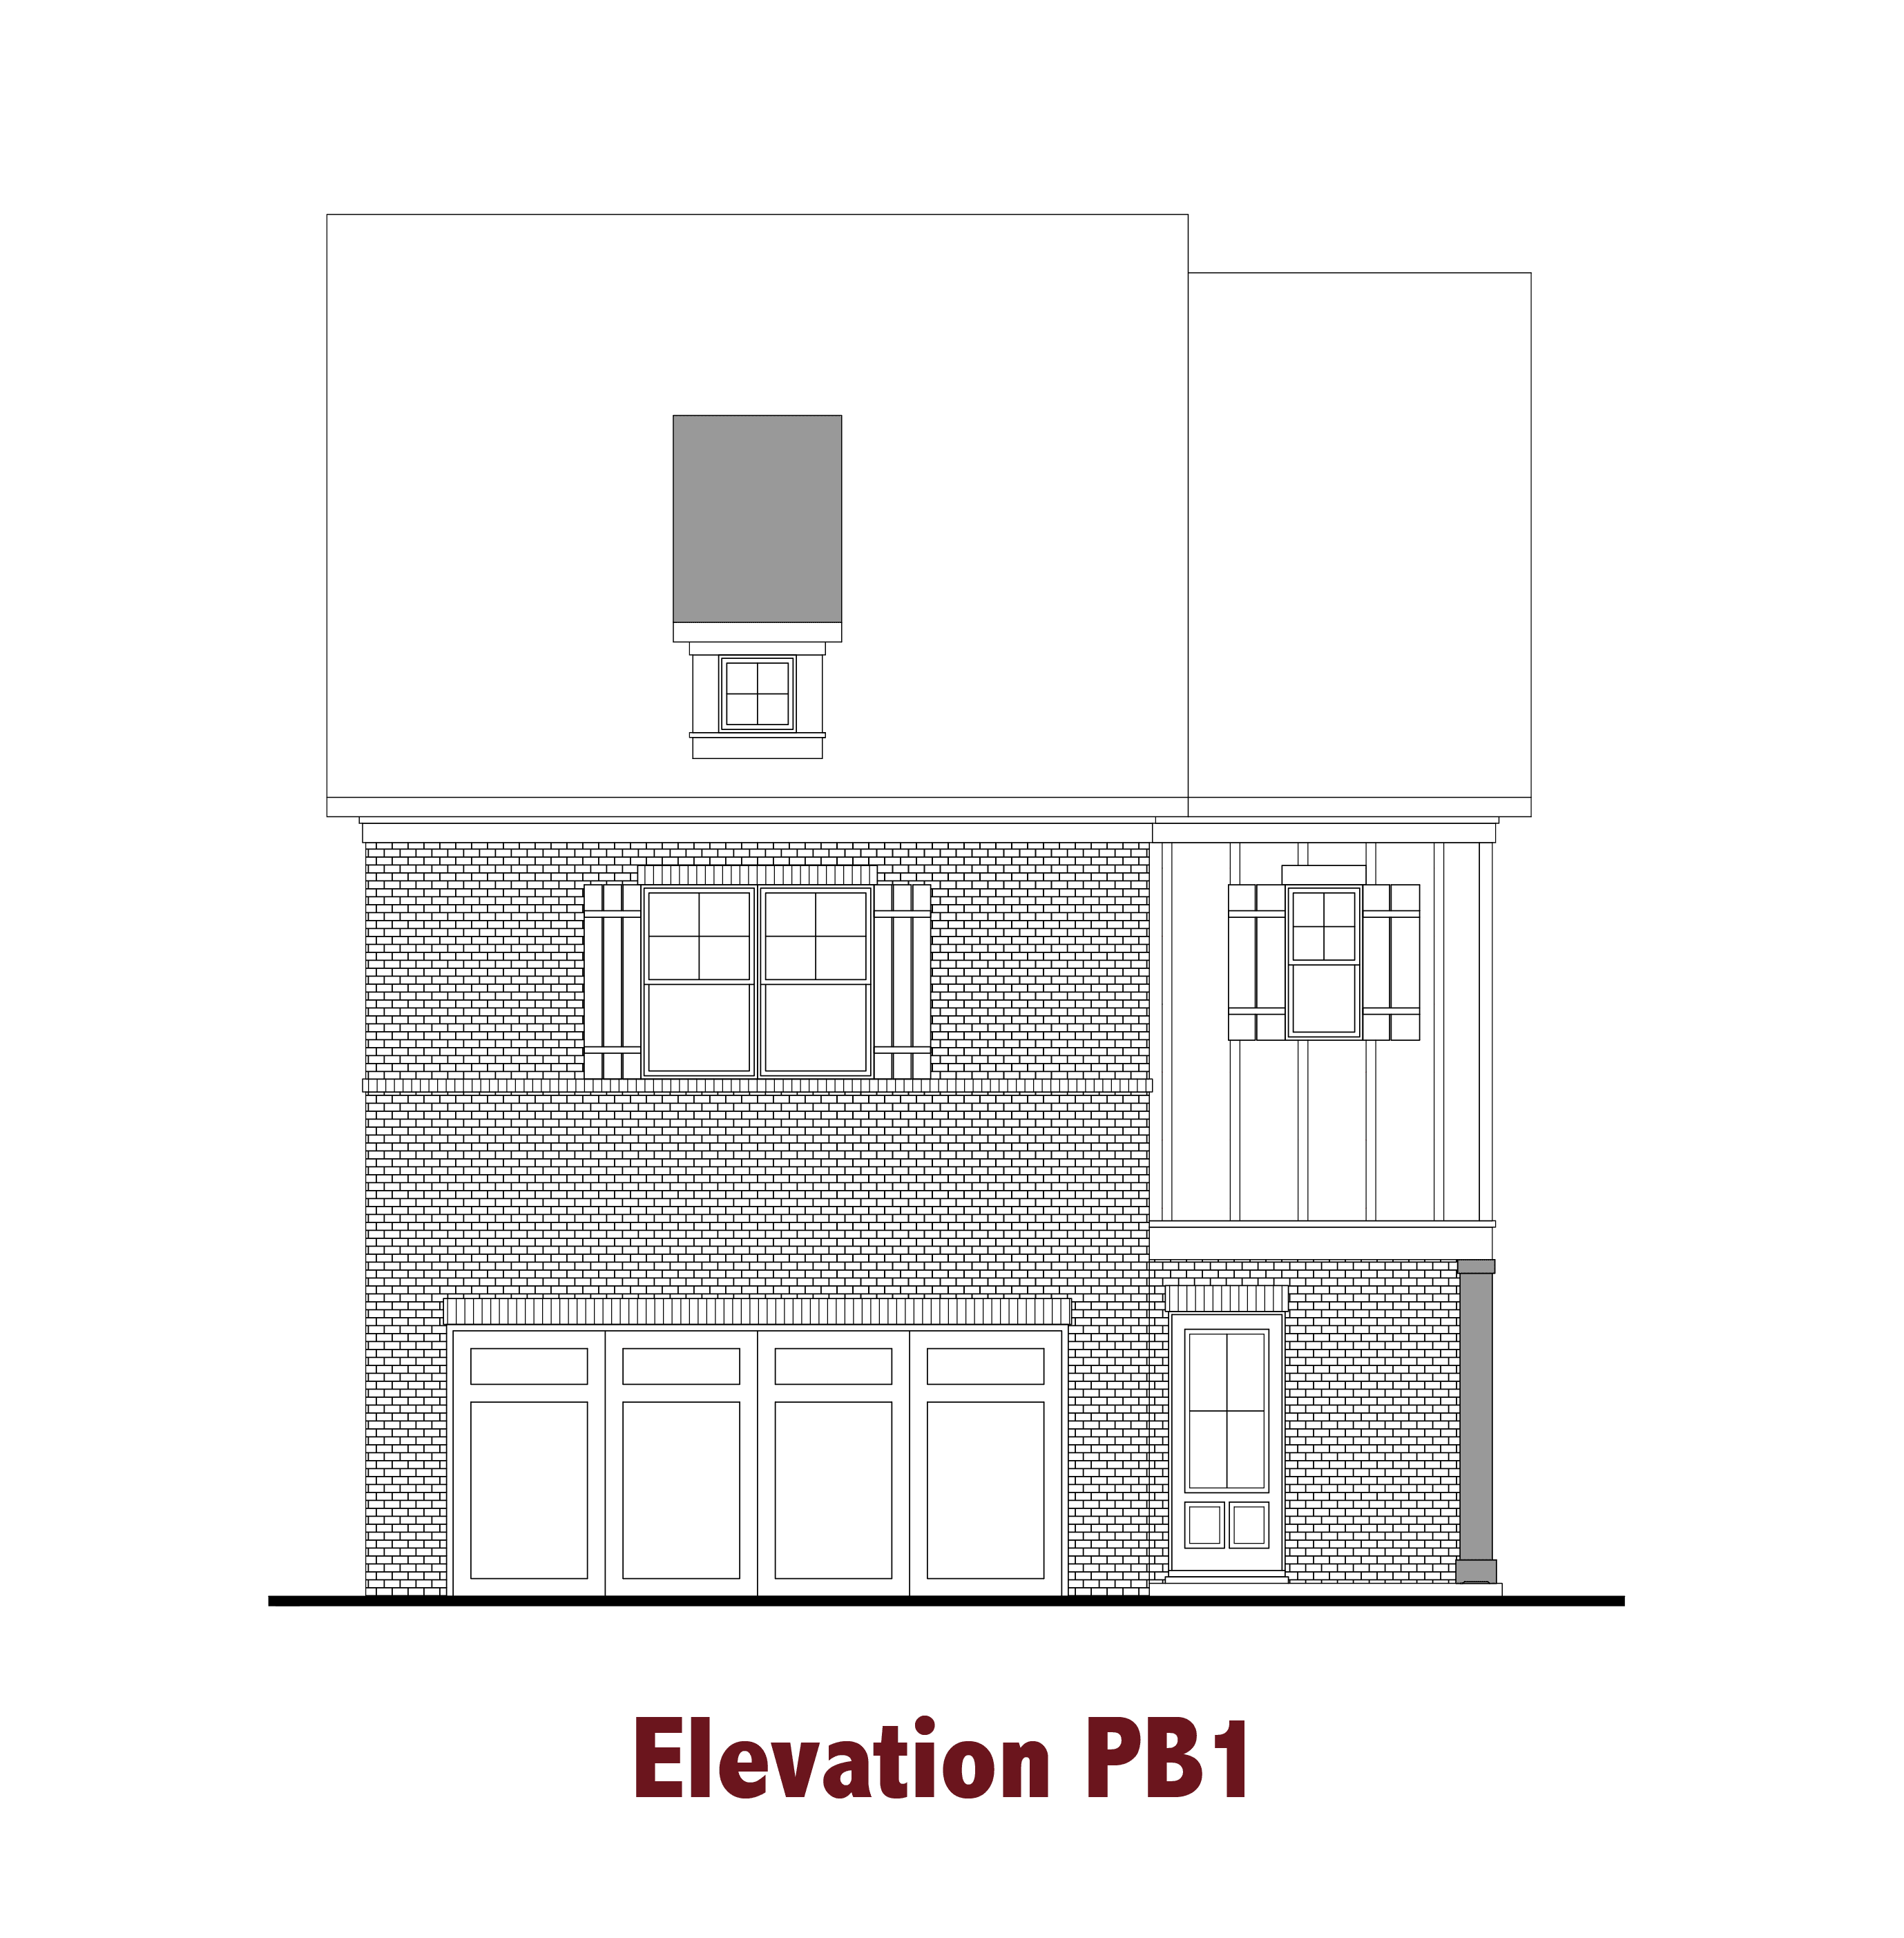 Chestnut elevations Image